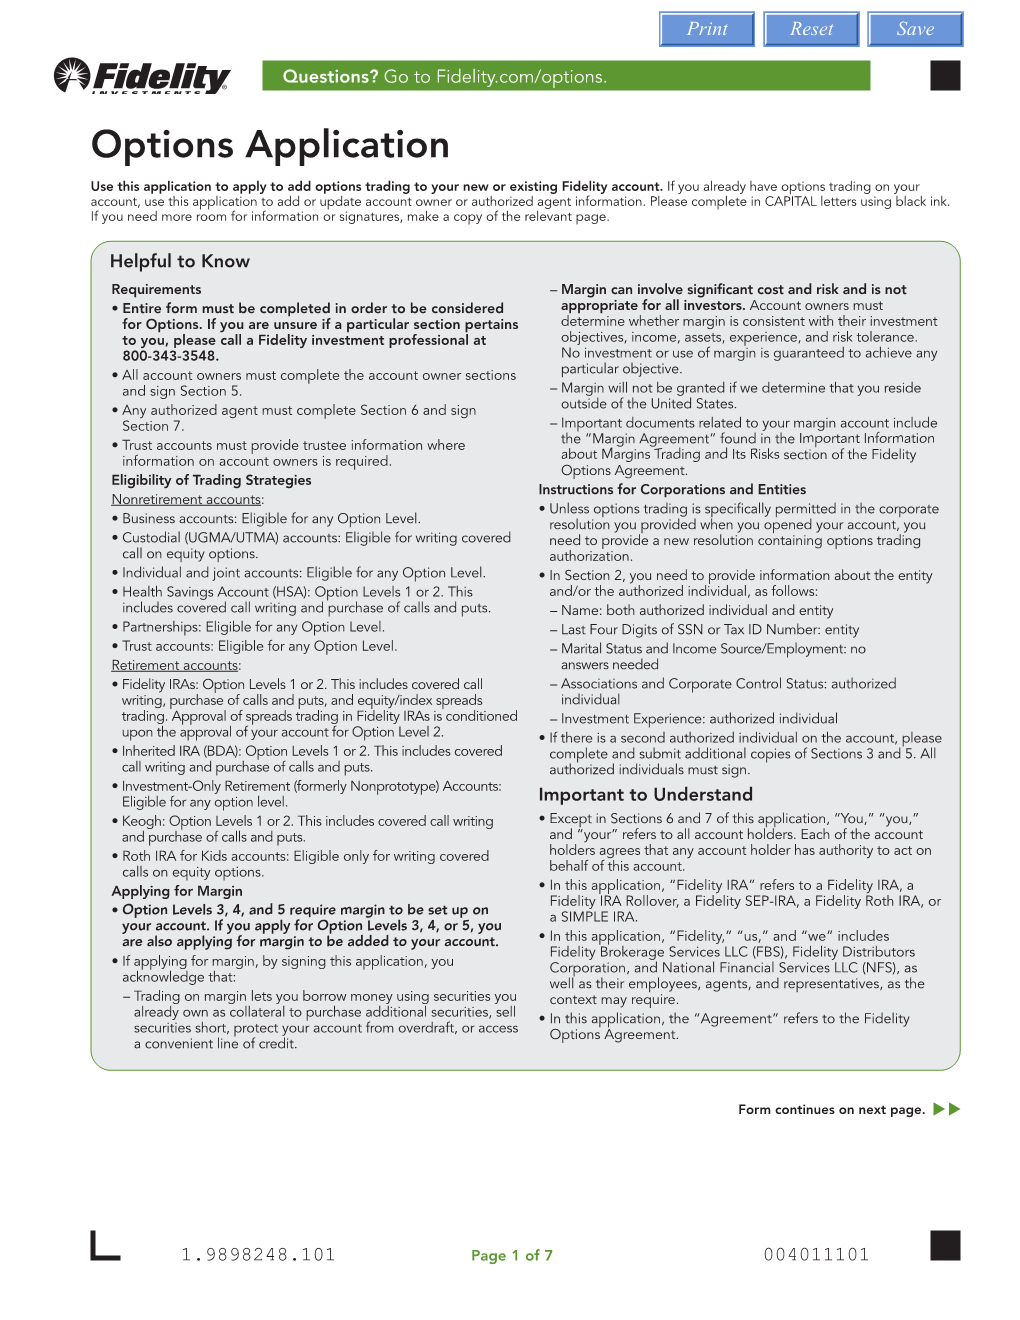 Options Application (PDF)